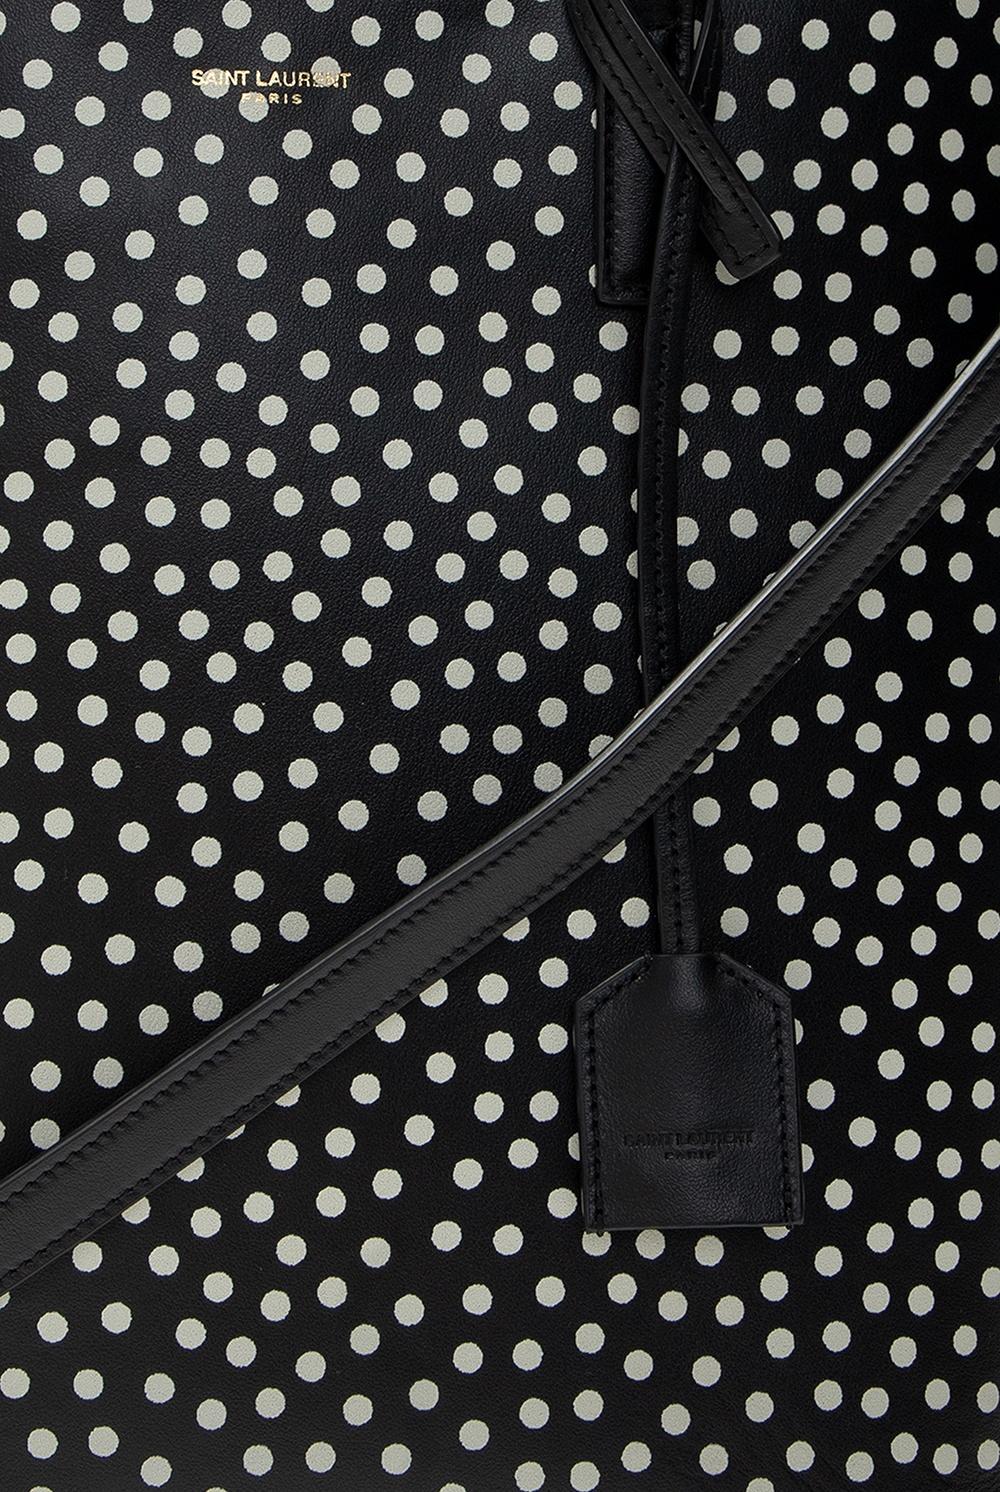 Saint Laurent Soft Leather Black Polka Dot Toy Shopping Bag For Sale 4